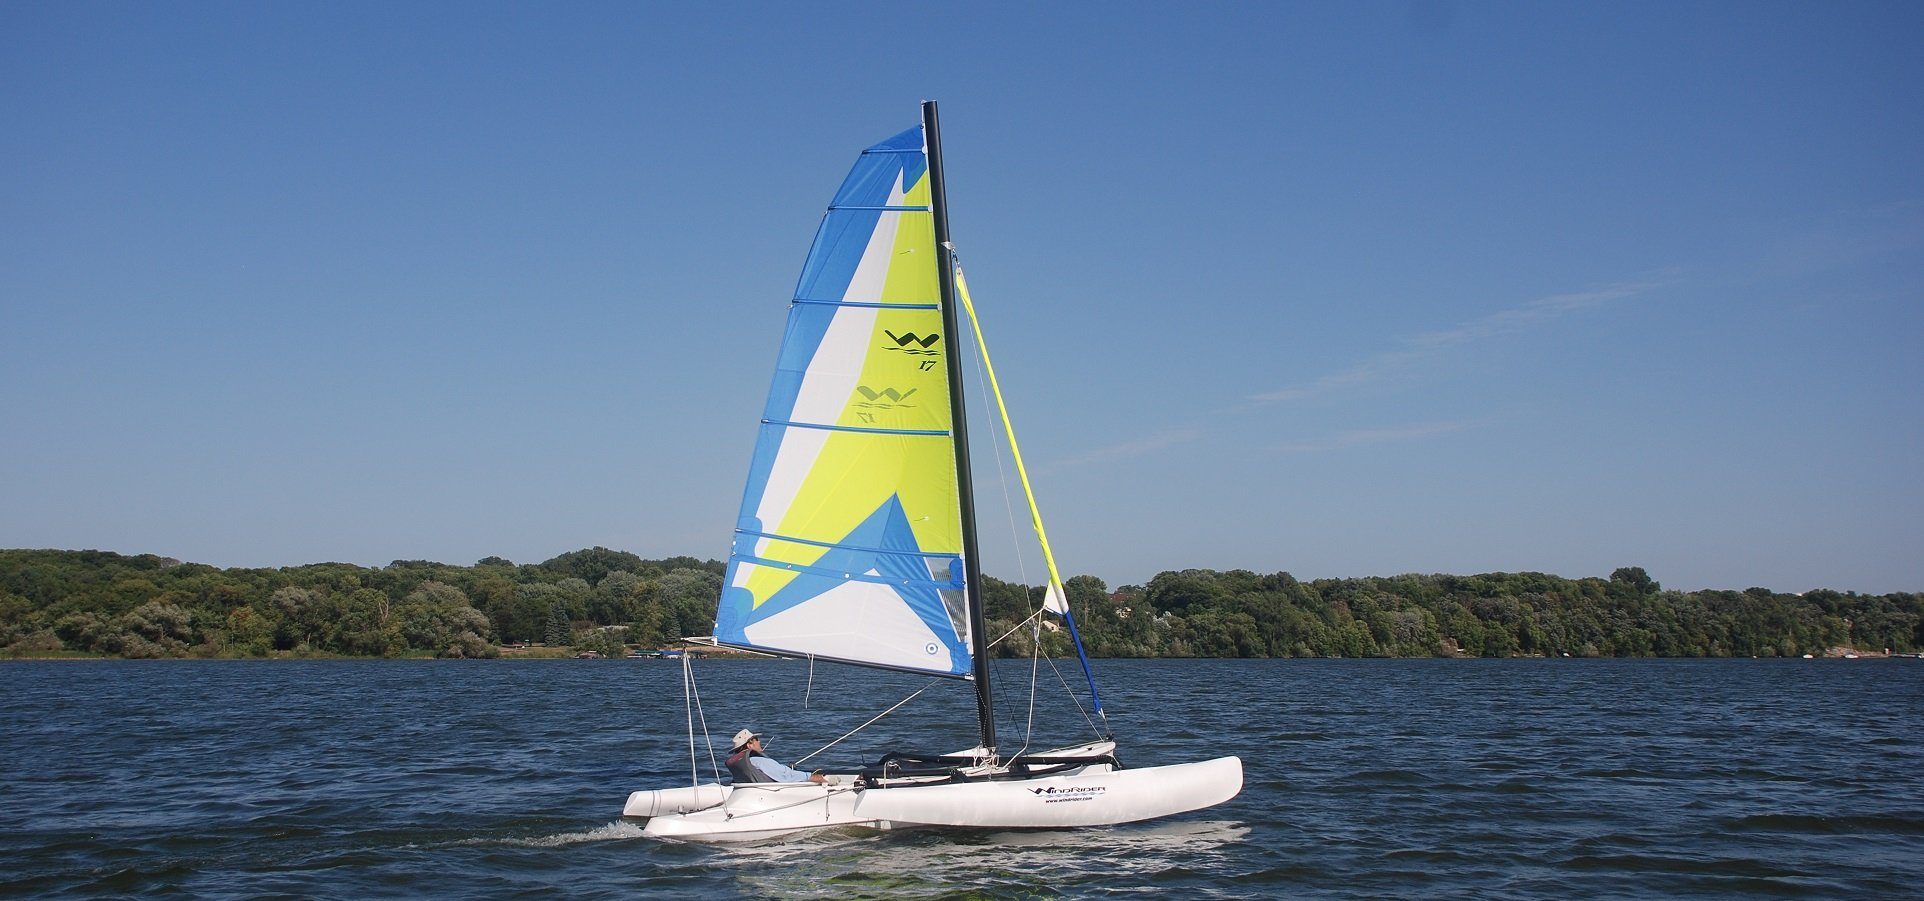 WindRider 17 Build Your Boat Sailboats WindRider 